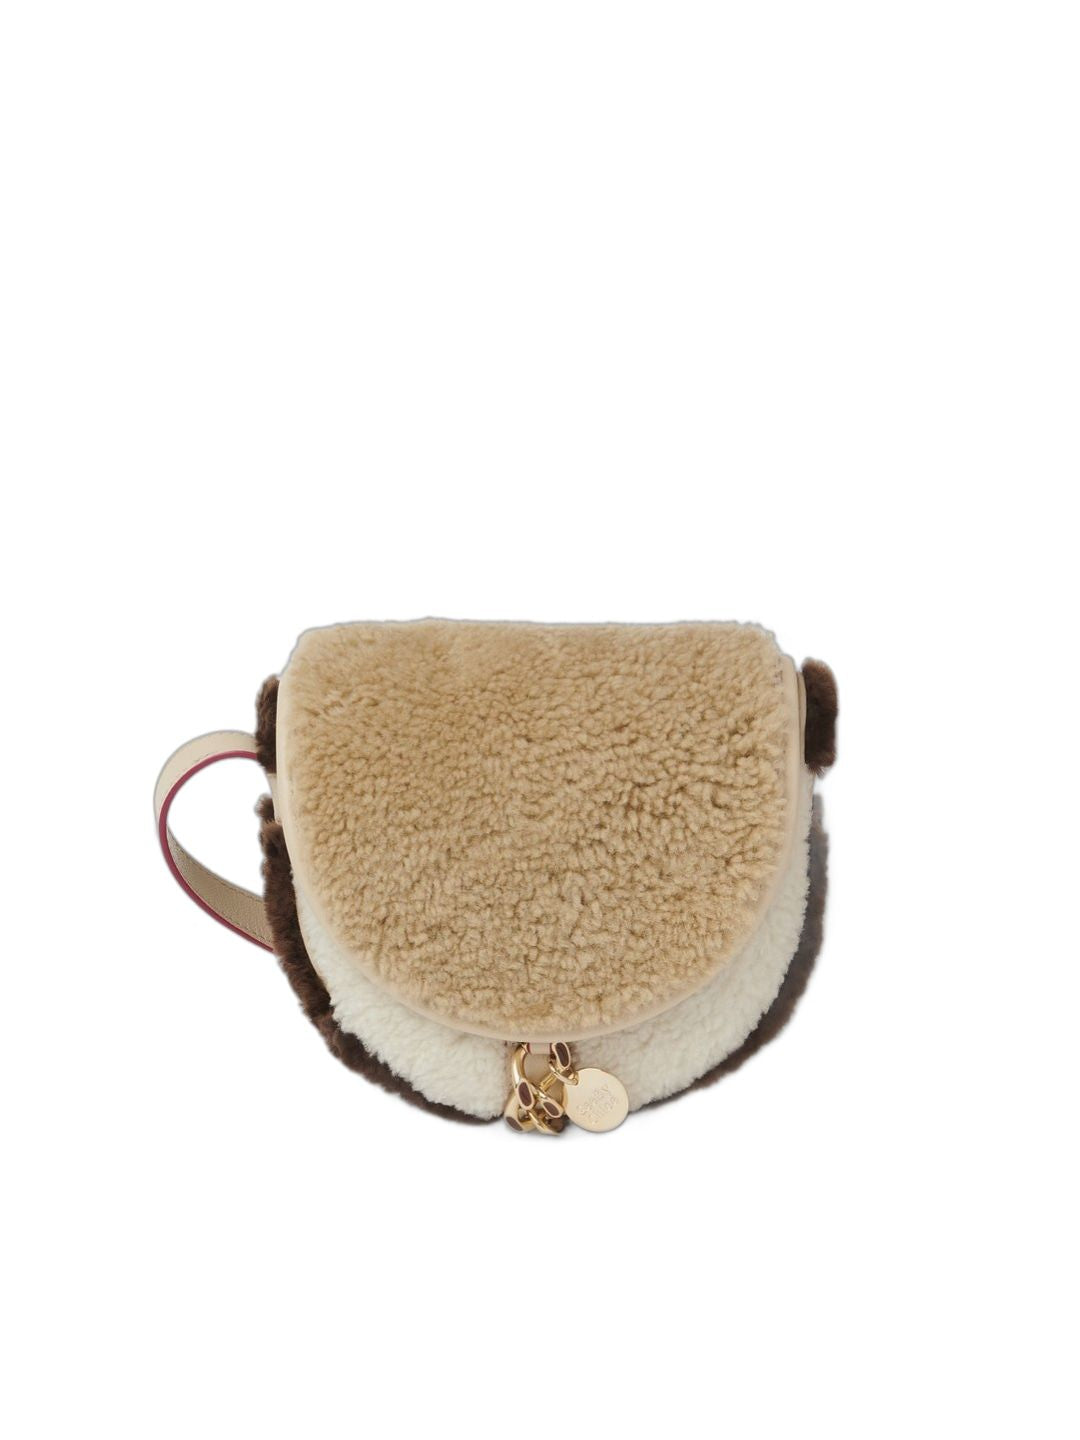 Cement Beige Shoulder Handbag for Women - FW23 Collection